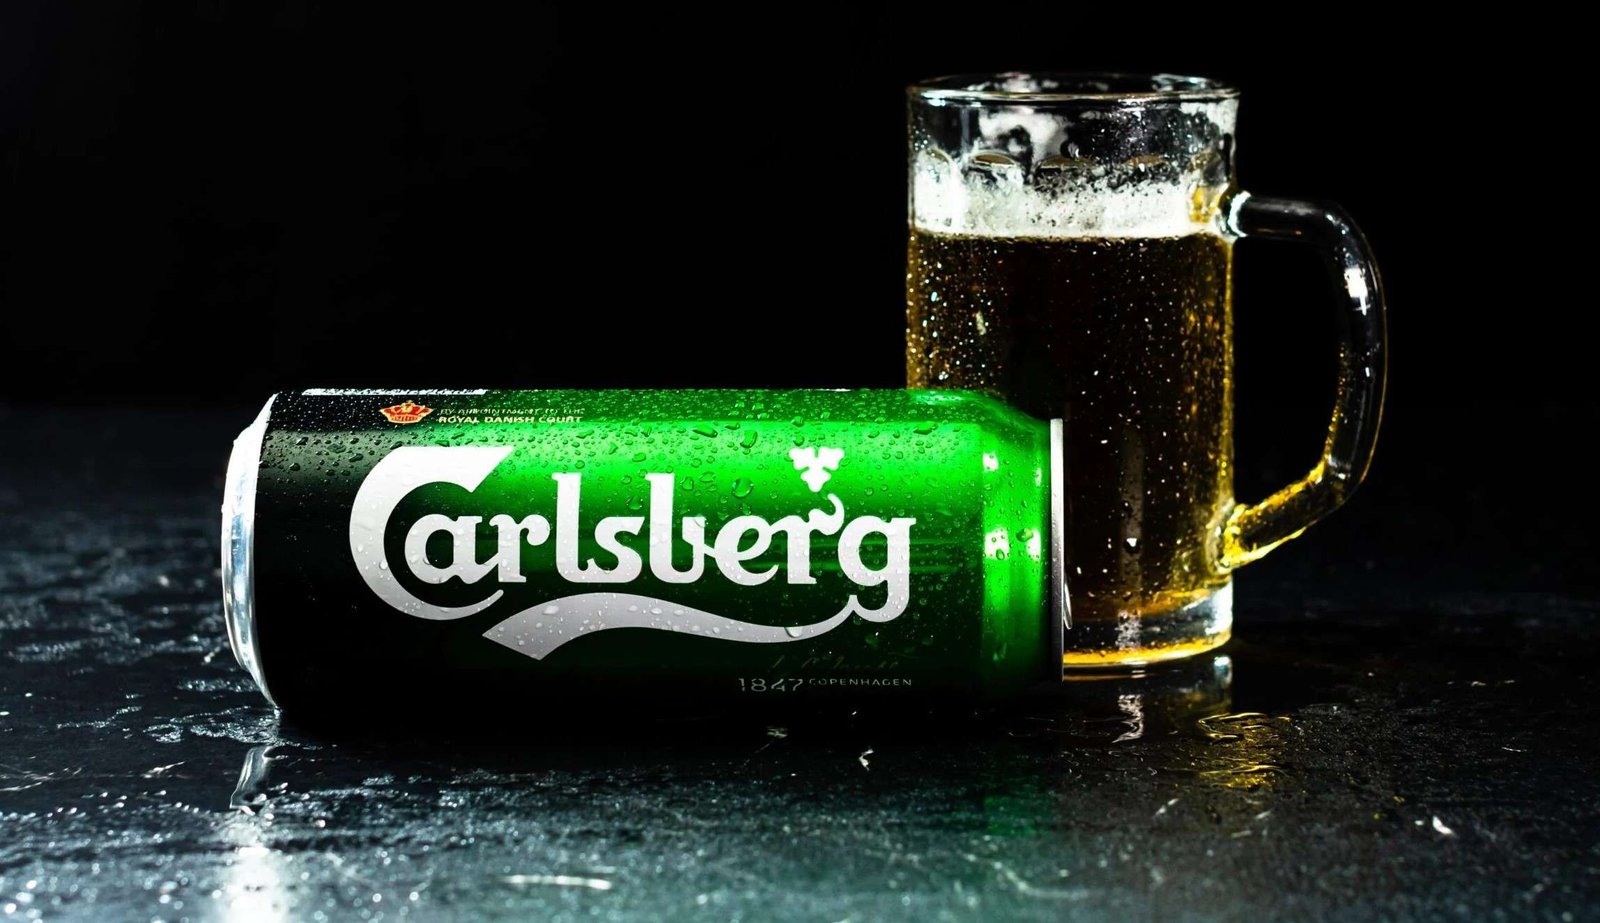 Marketing Strategy of Carlsberg